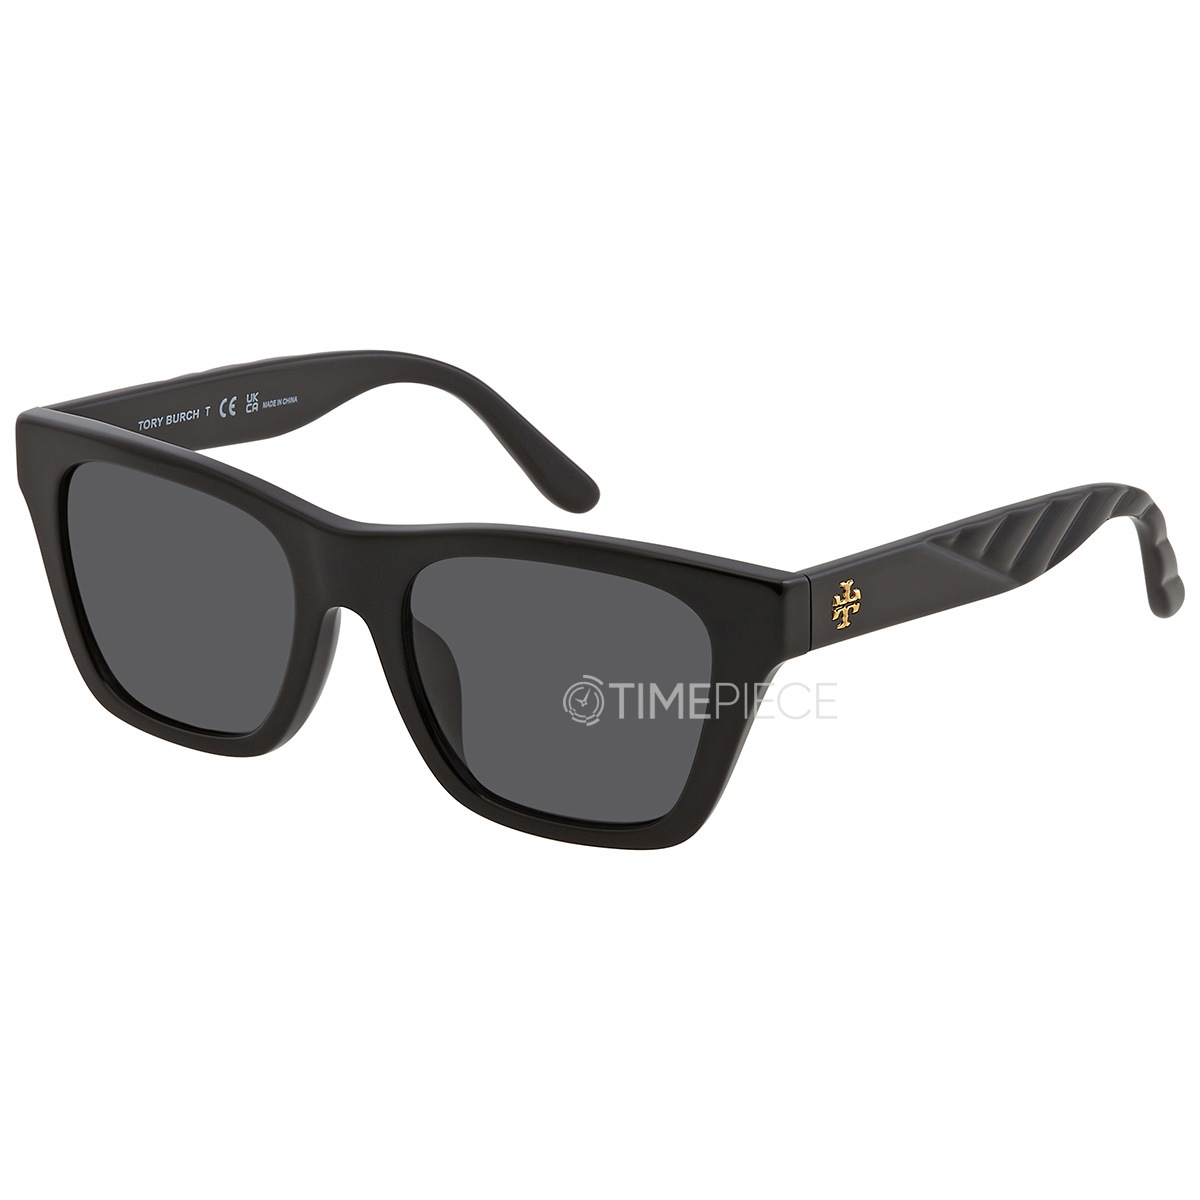 Tory Burch Solid Gray Rectangular Ladies Sunglasses TY7181U 170987 52